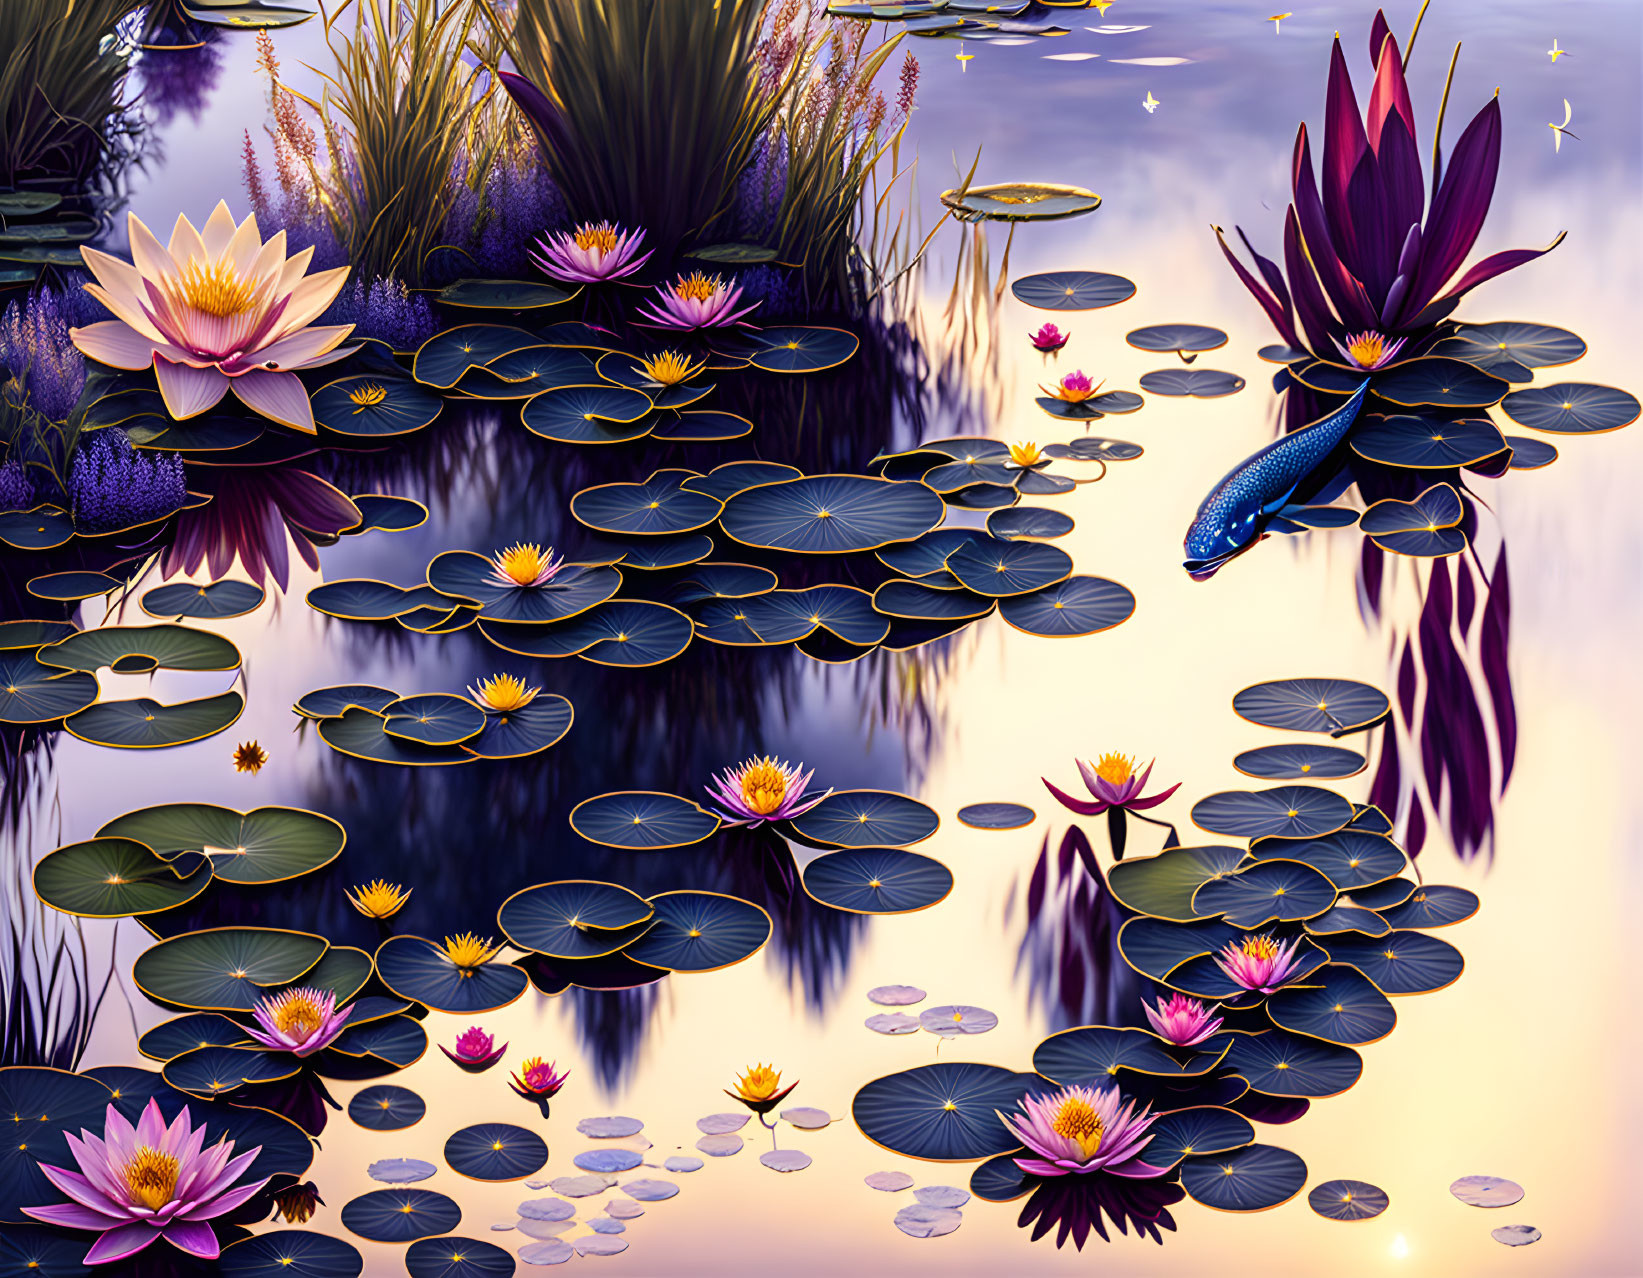 Digital artwork: Serene pond with lily pads, lotus flowers, koi fish, twilight